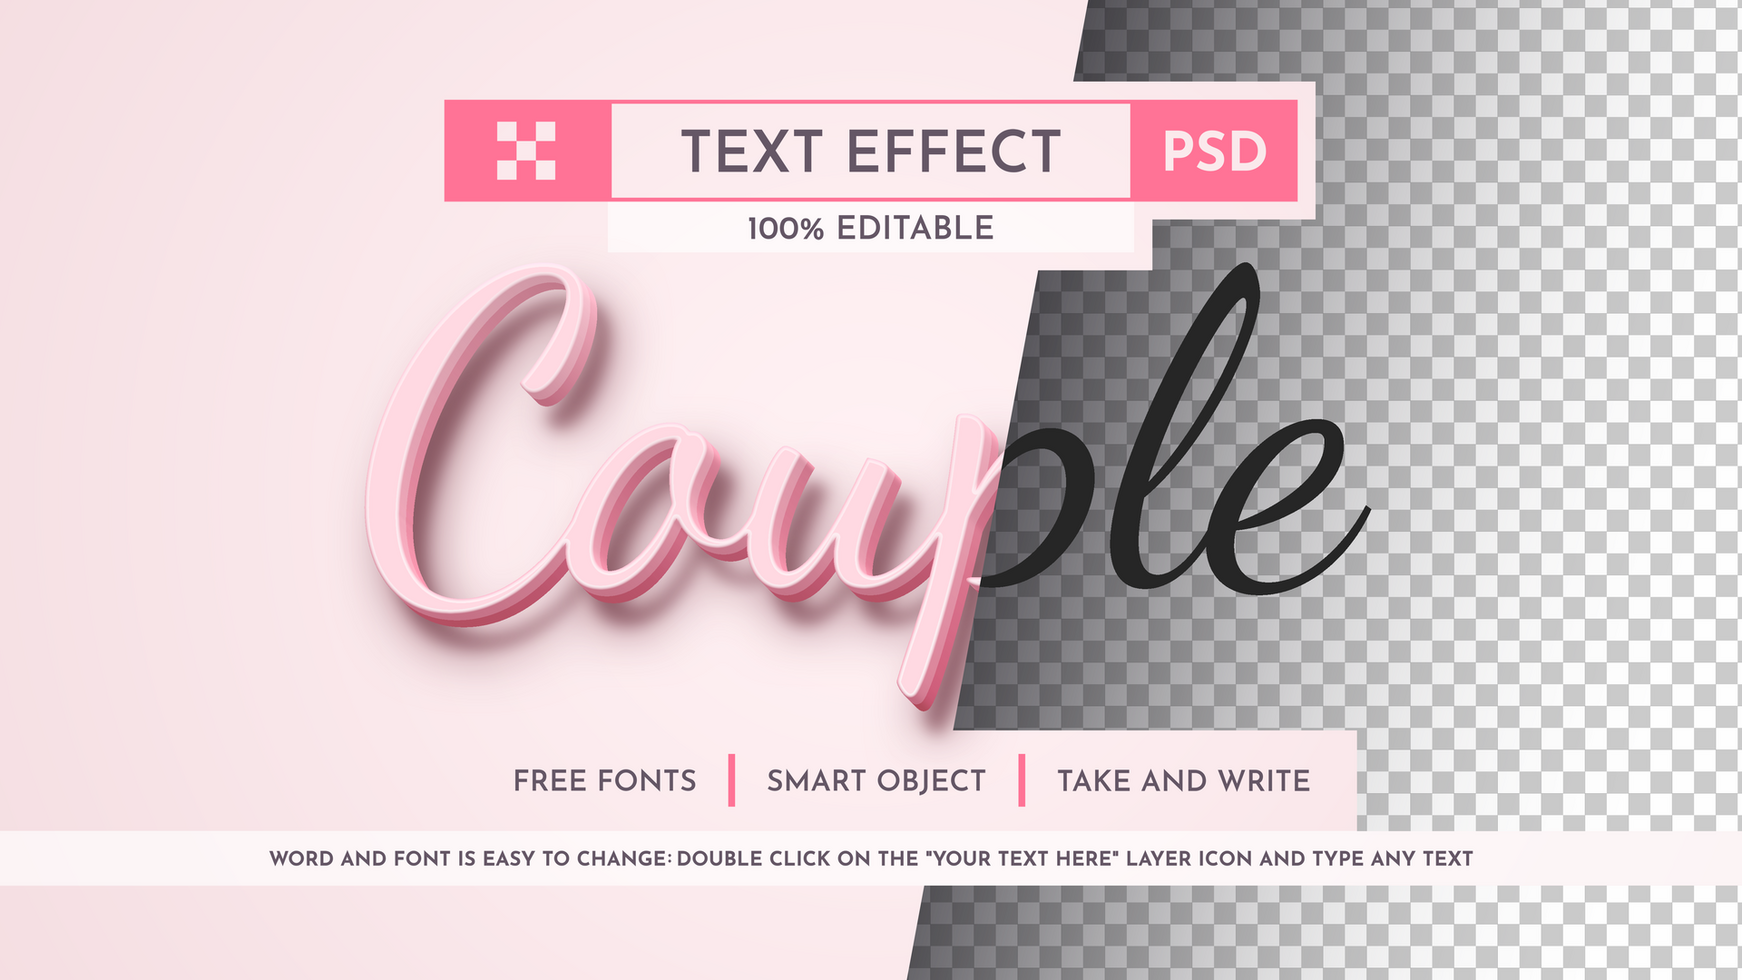 Couple Editable Text Effect, Font Style psd